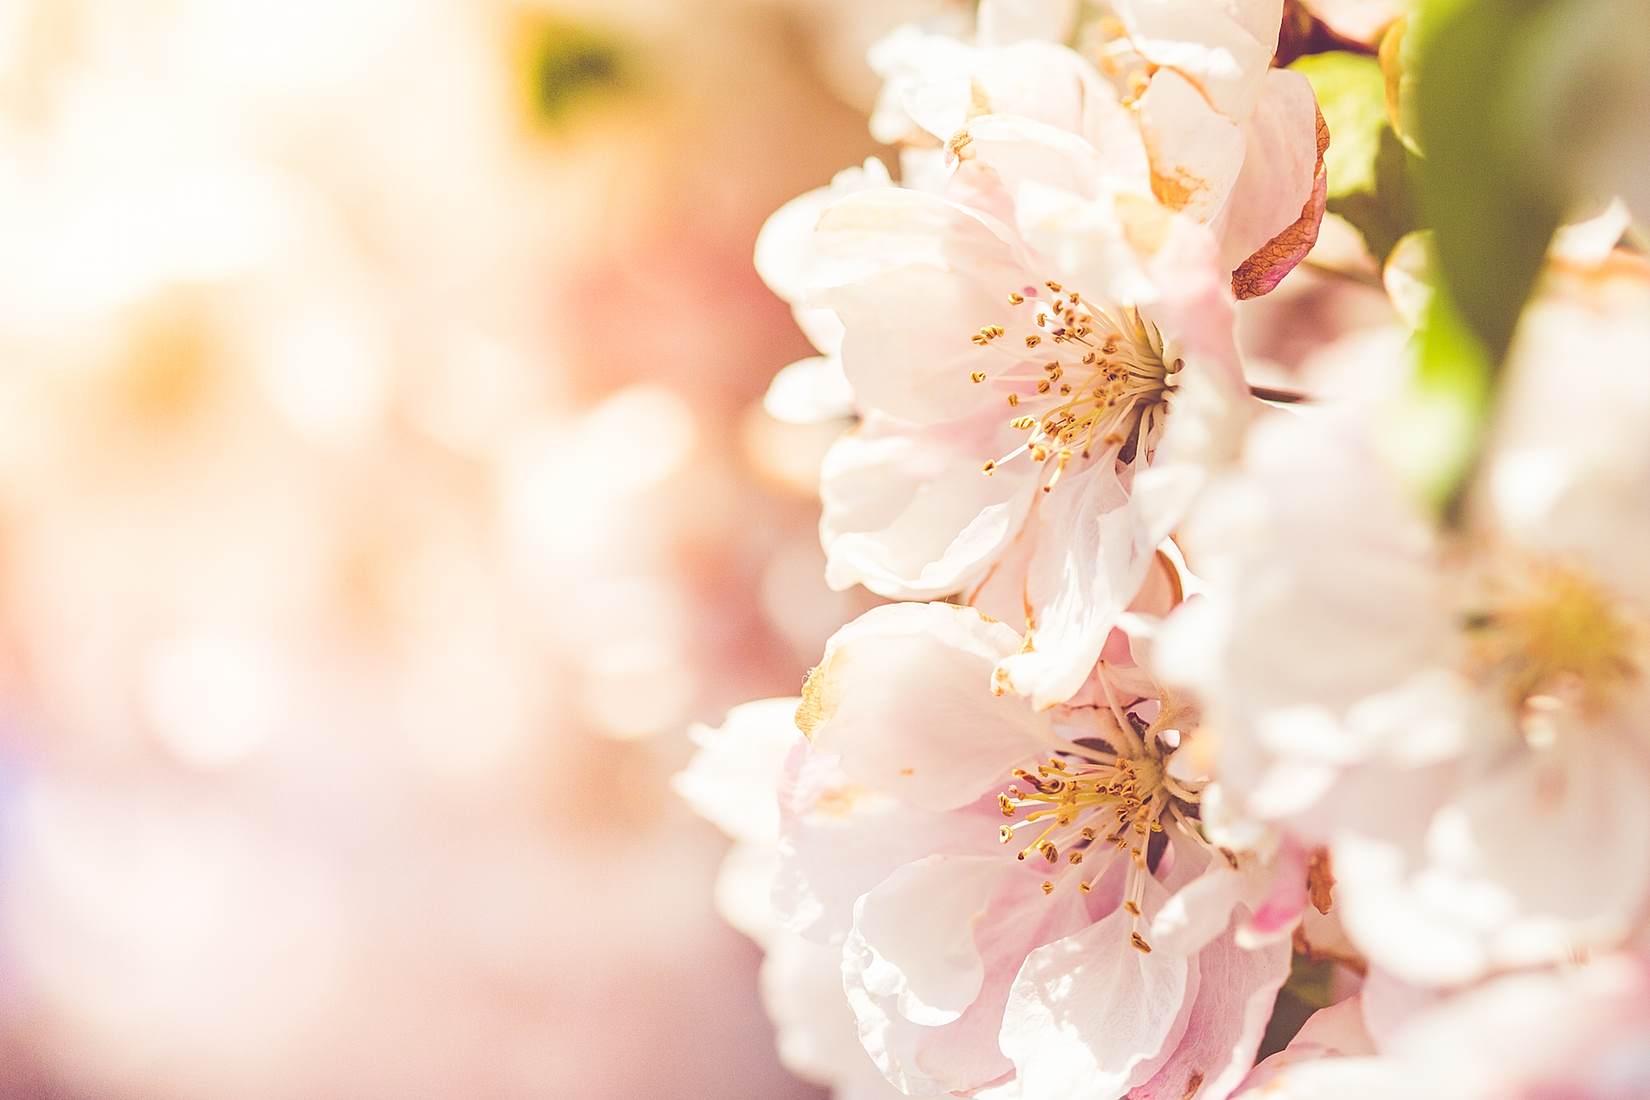 Wonderful Spring Blooms BY VIKTOR HANACEK via picjumbo.com